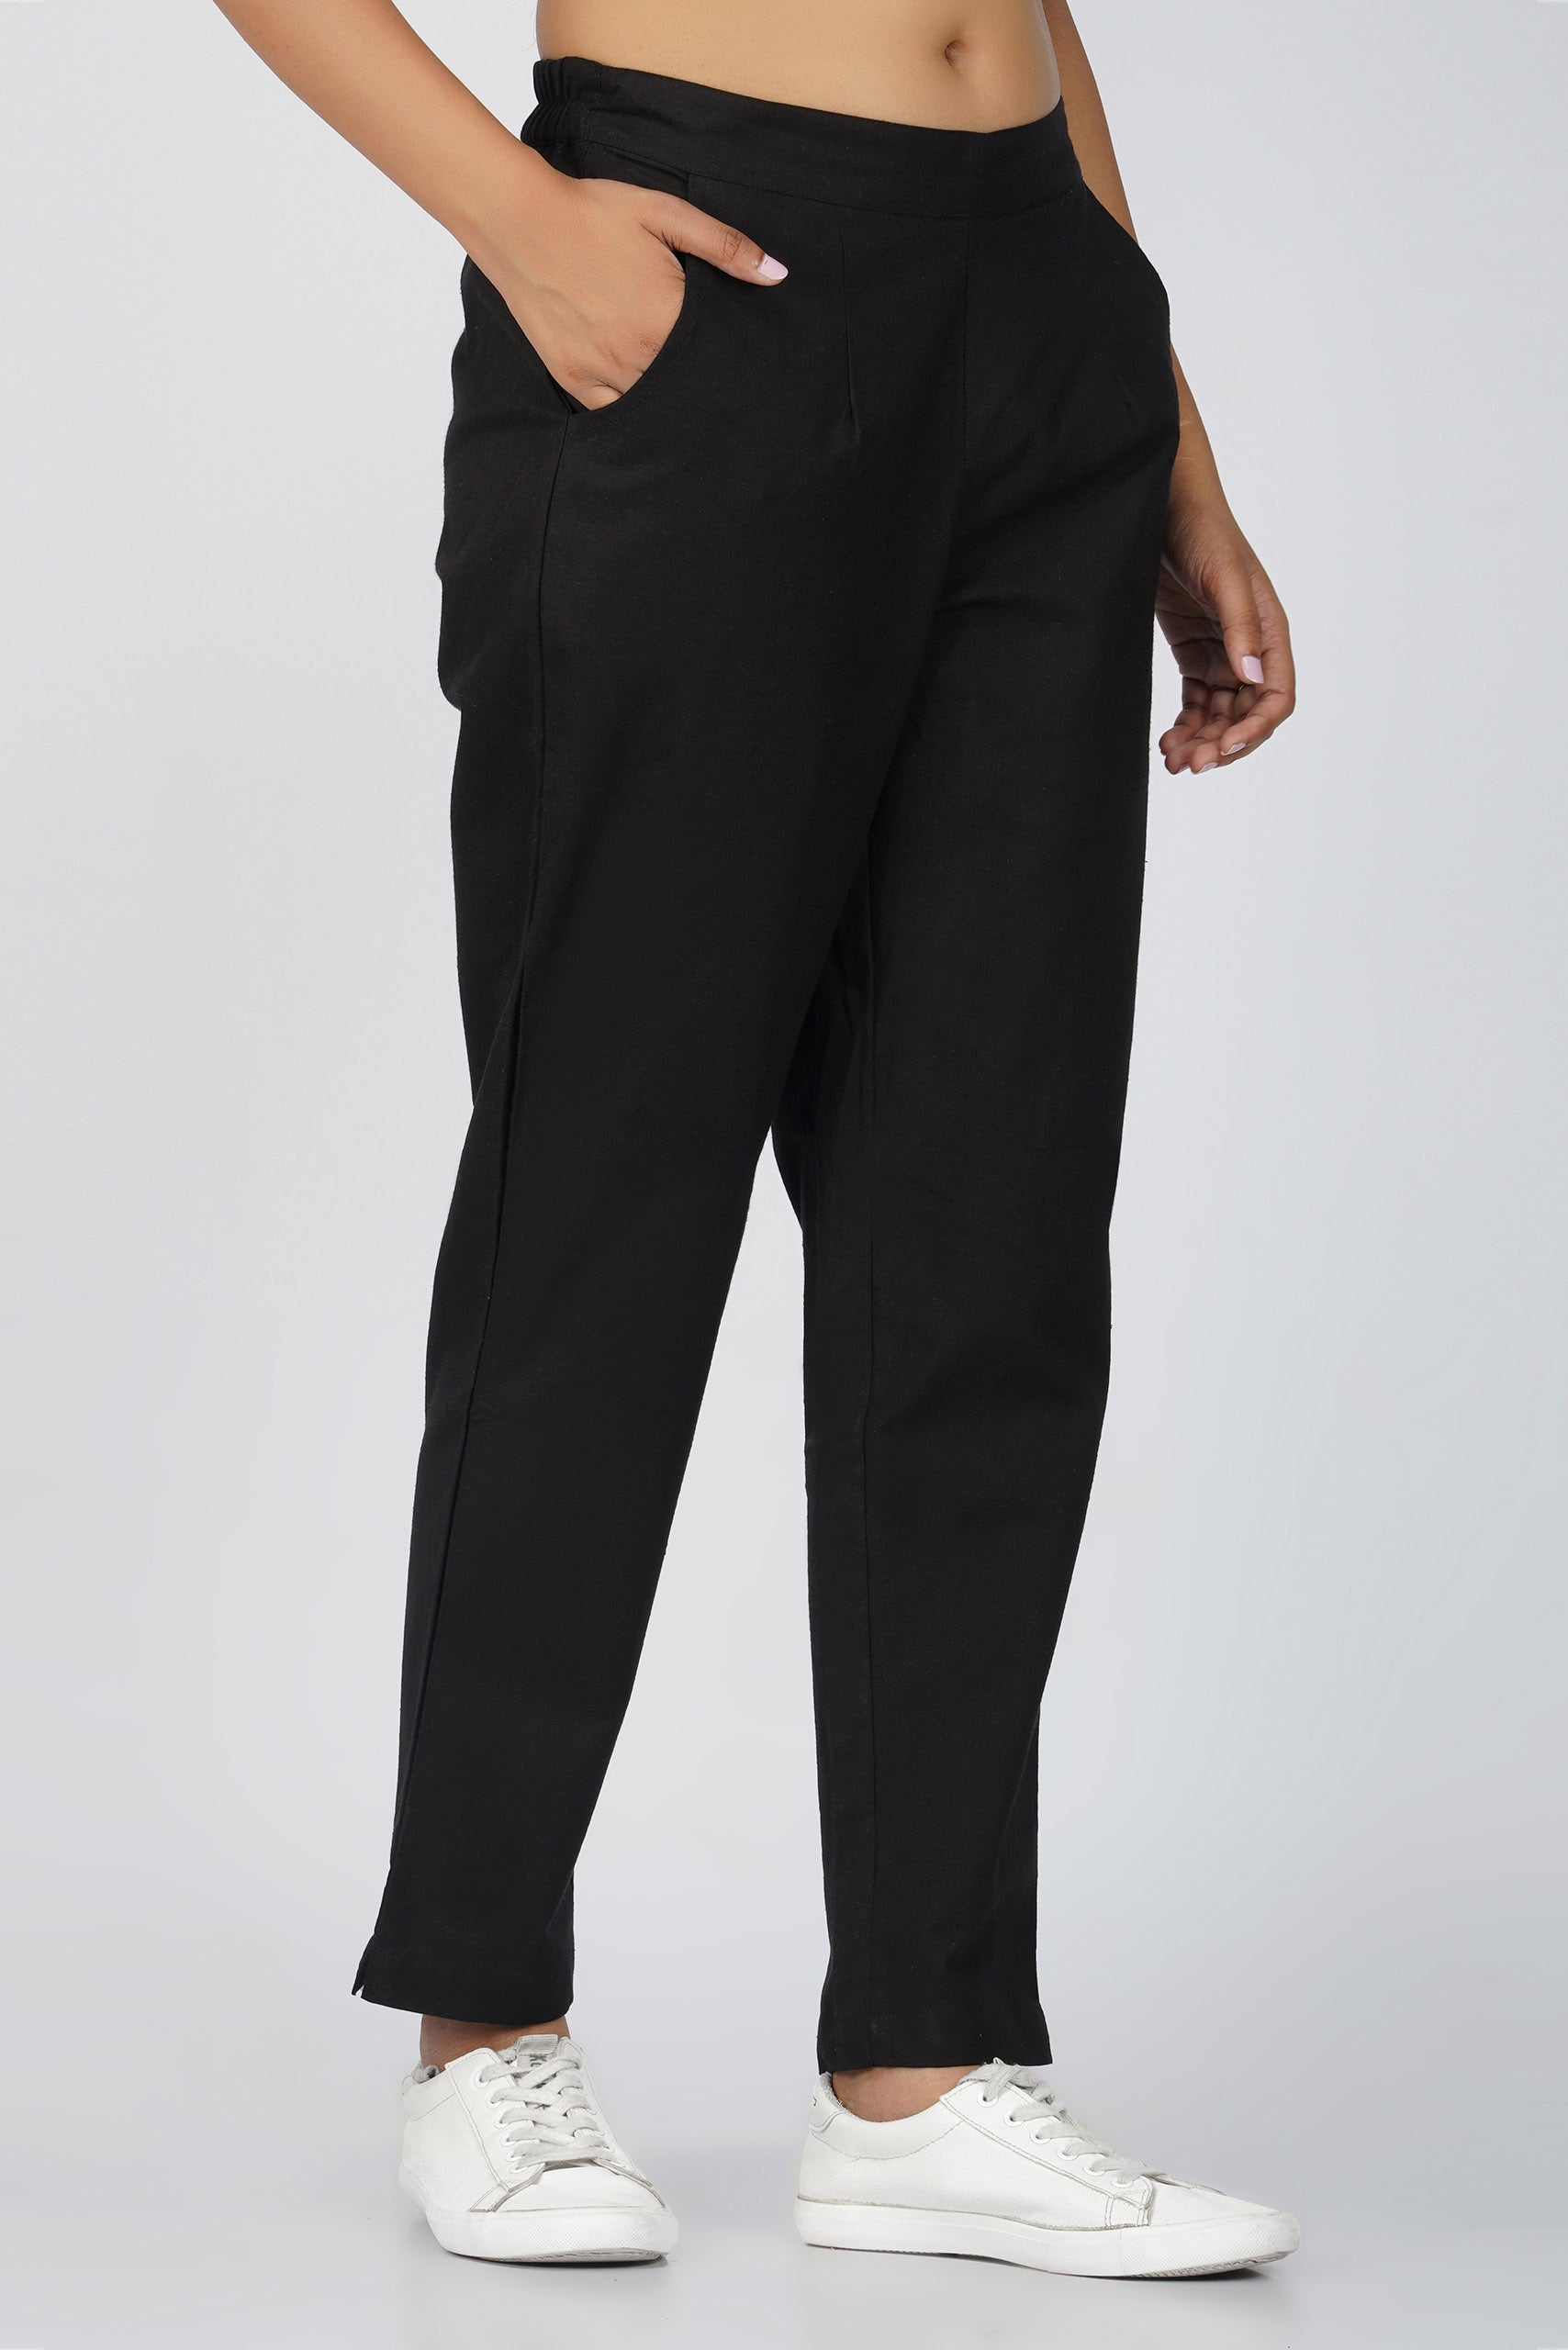 Style Prezone Black Women Cotton Pants, Waist Size: L.XL.XXL.3XL at Rs  195/piece in New Delhi